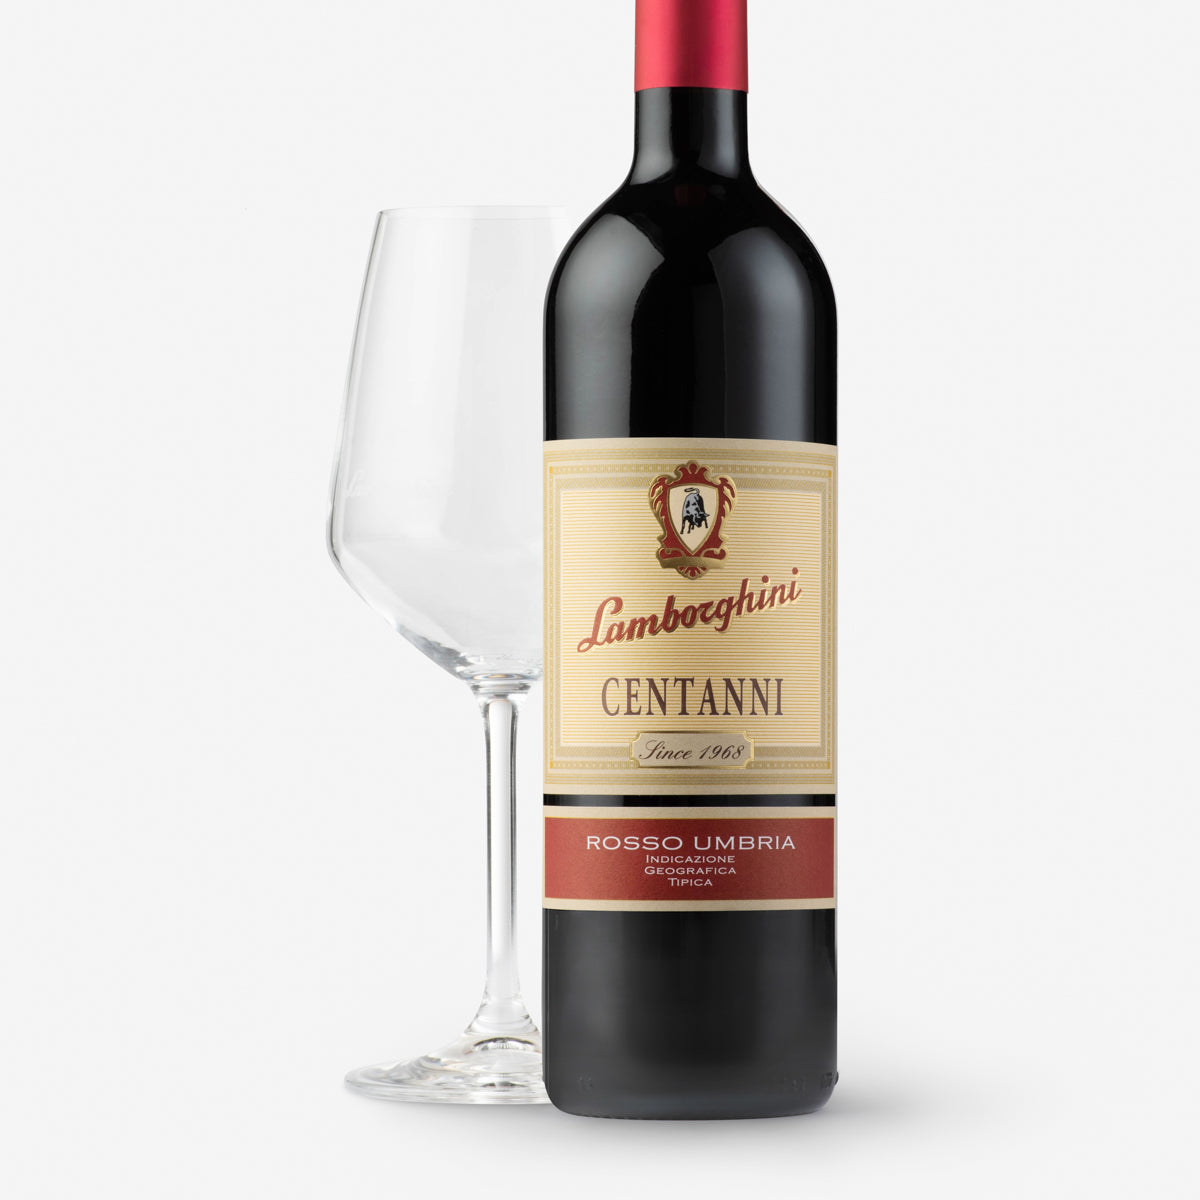 Lamborghini Crystal Glass Wine Set – Wine by Lamborghini